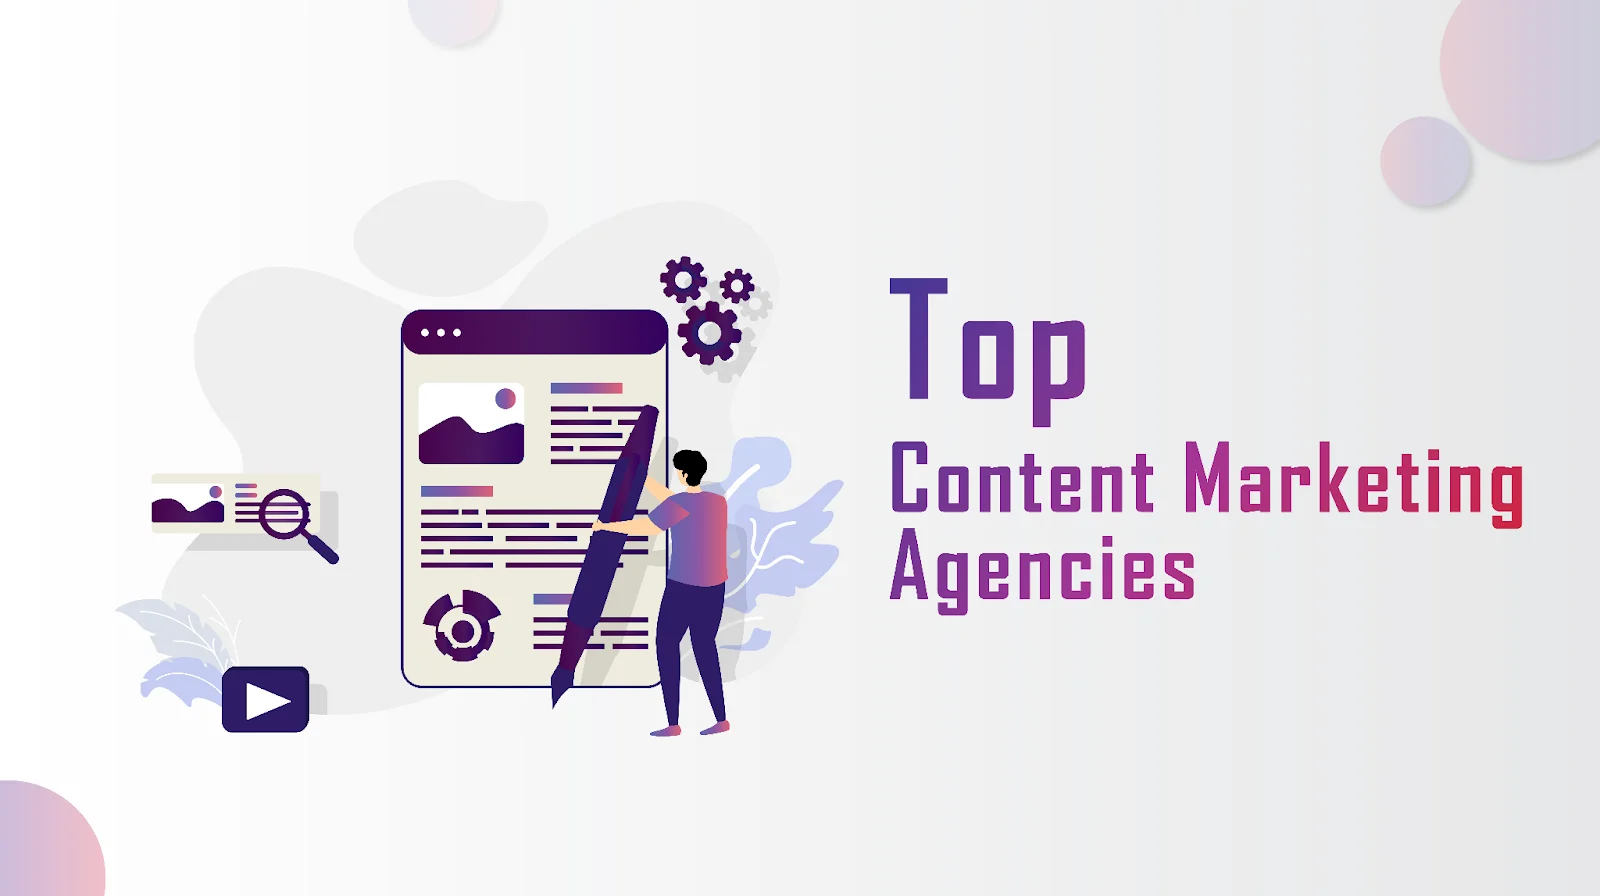 Content marketing agencies